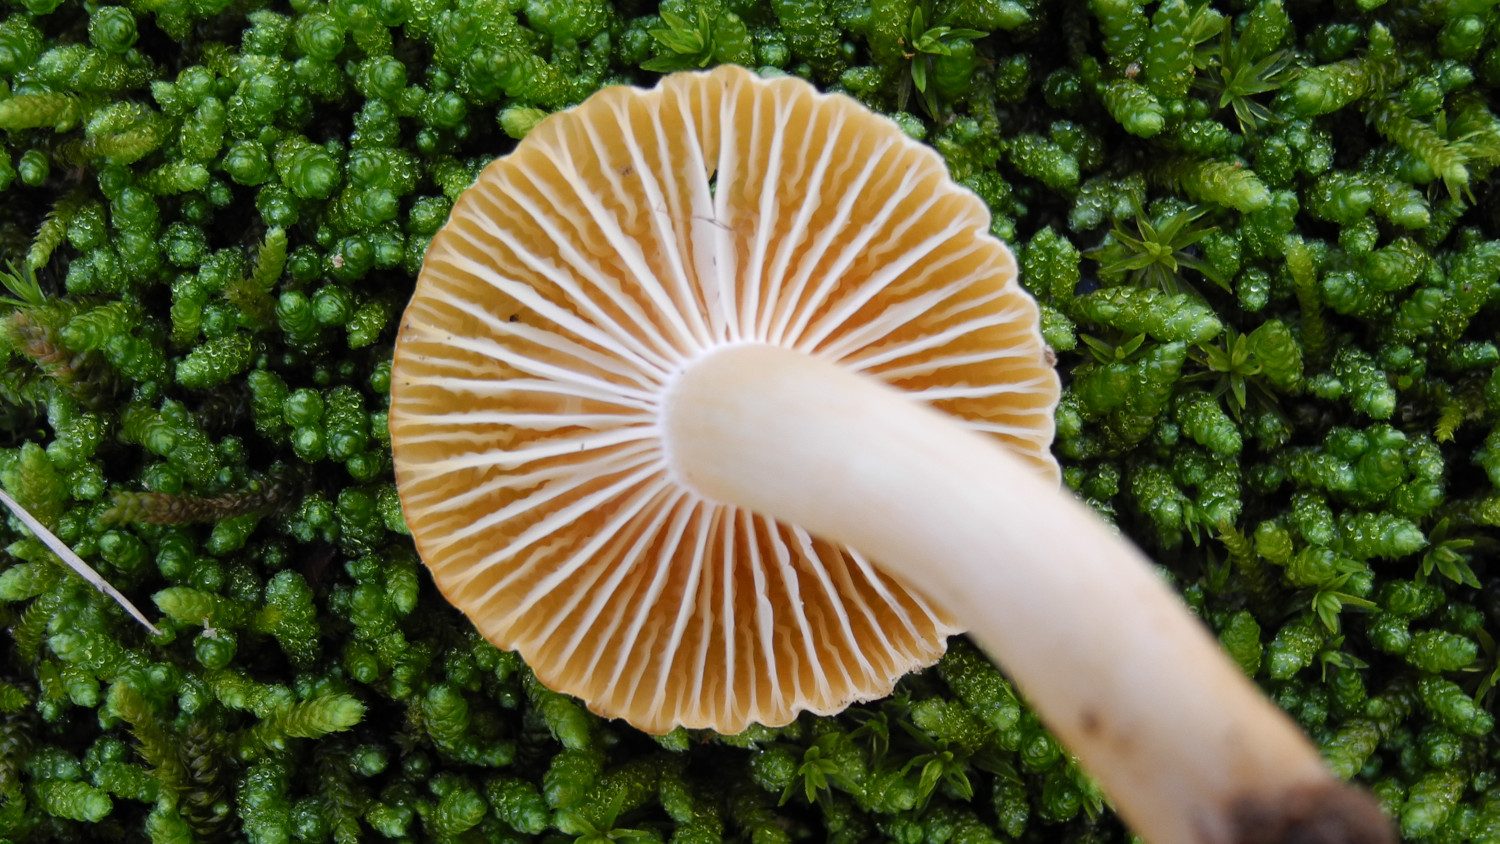 Underside of mushroom